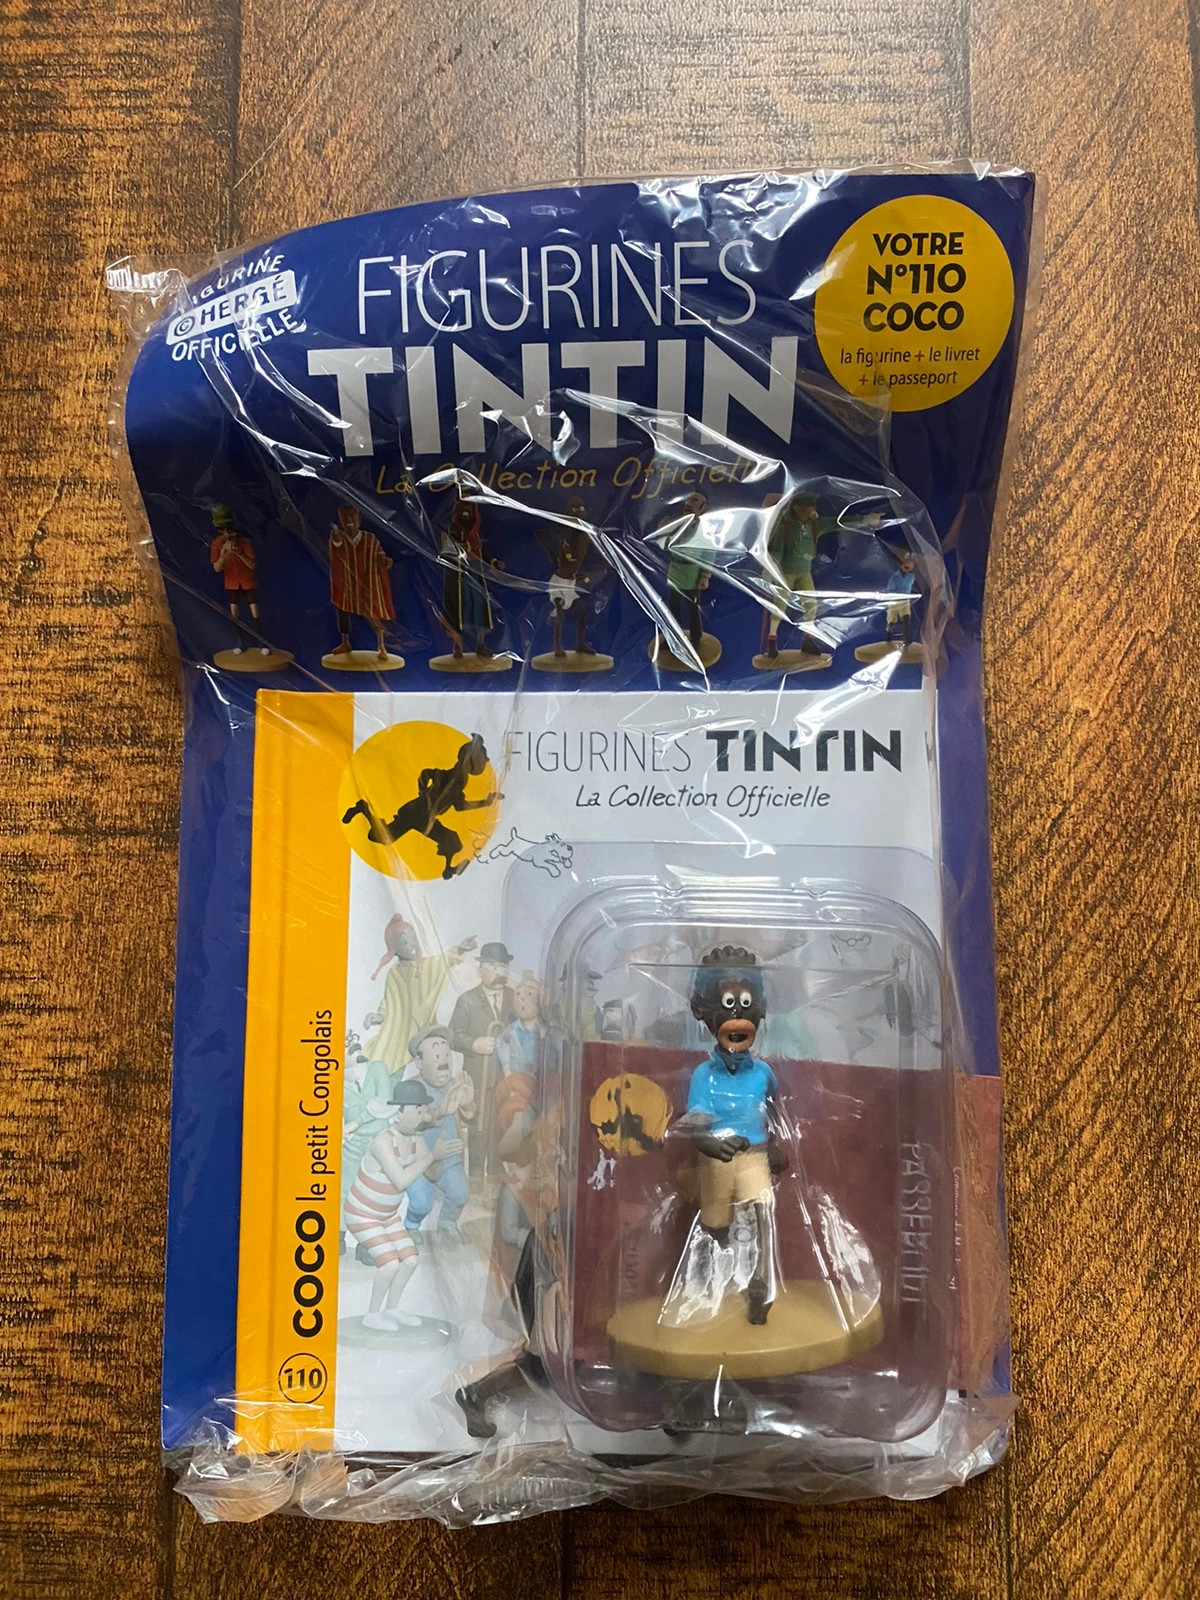 Acheter sa première figurine Tintin de collection – Galerie Neuf